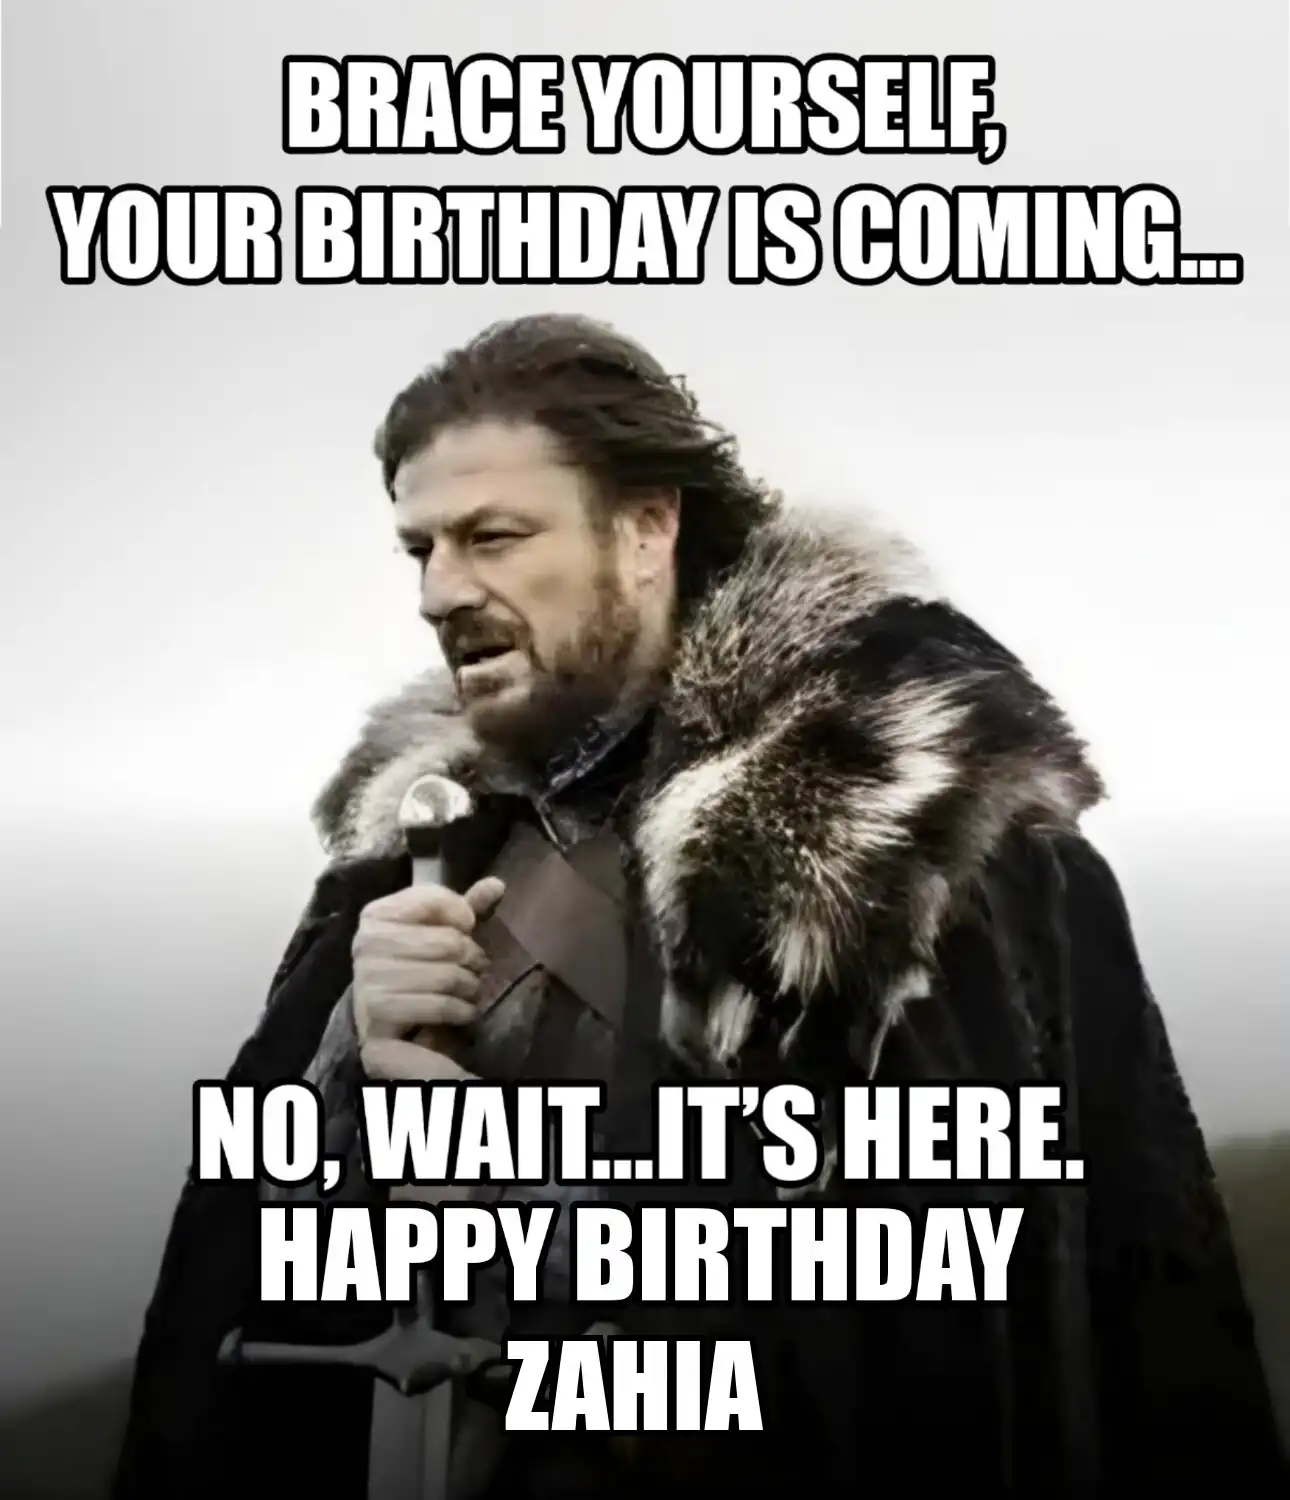 Happy Birthday Zahia Brace Yourself Your Birthday Is Coming Meme